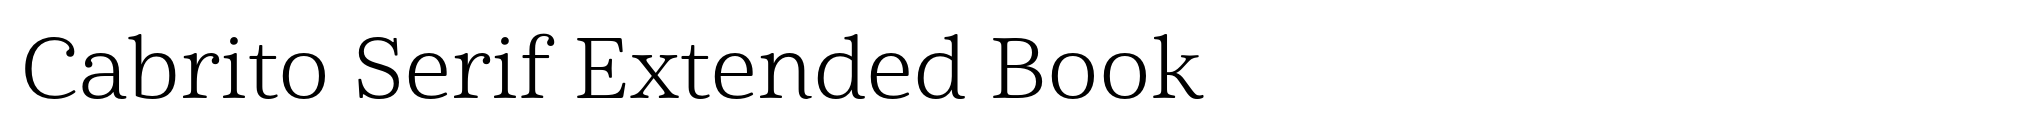 Cabrito Serif Extended Book image